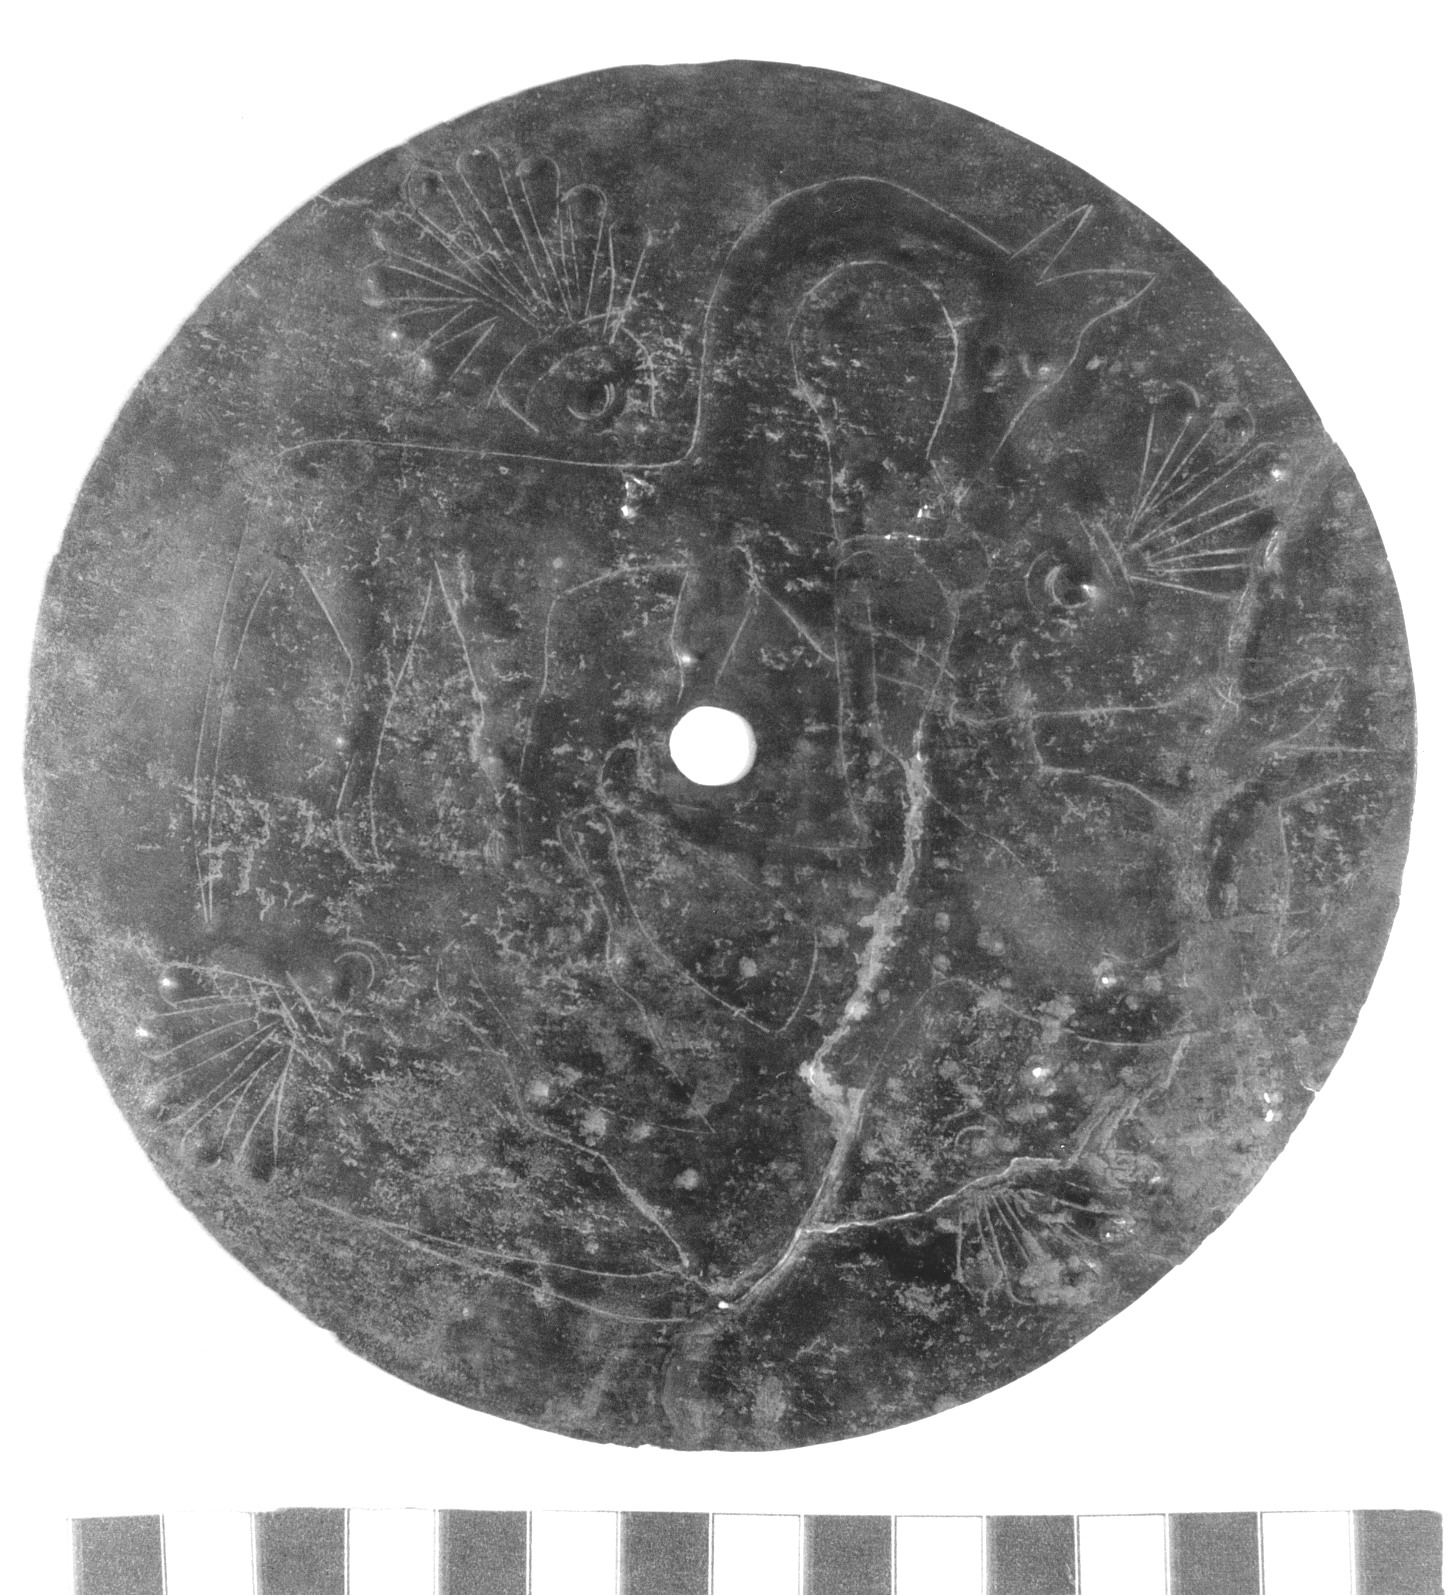 disco - civiltà picena (sec. VII a.C)